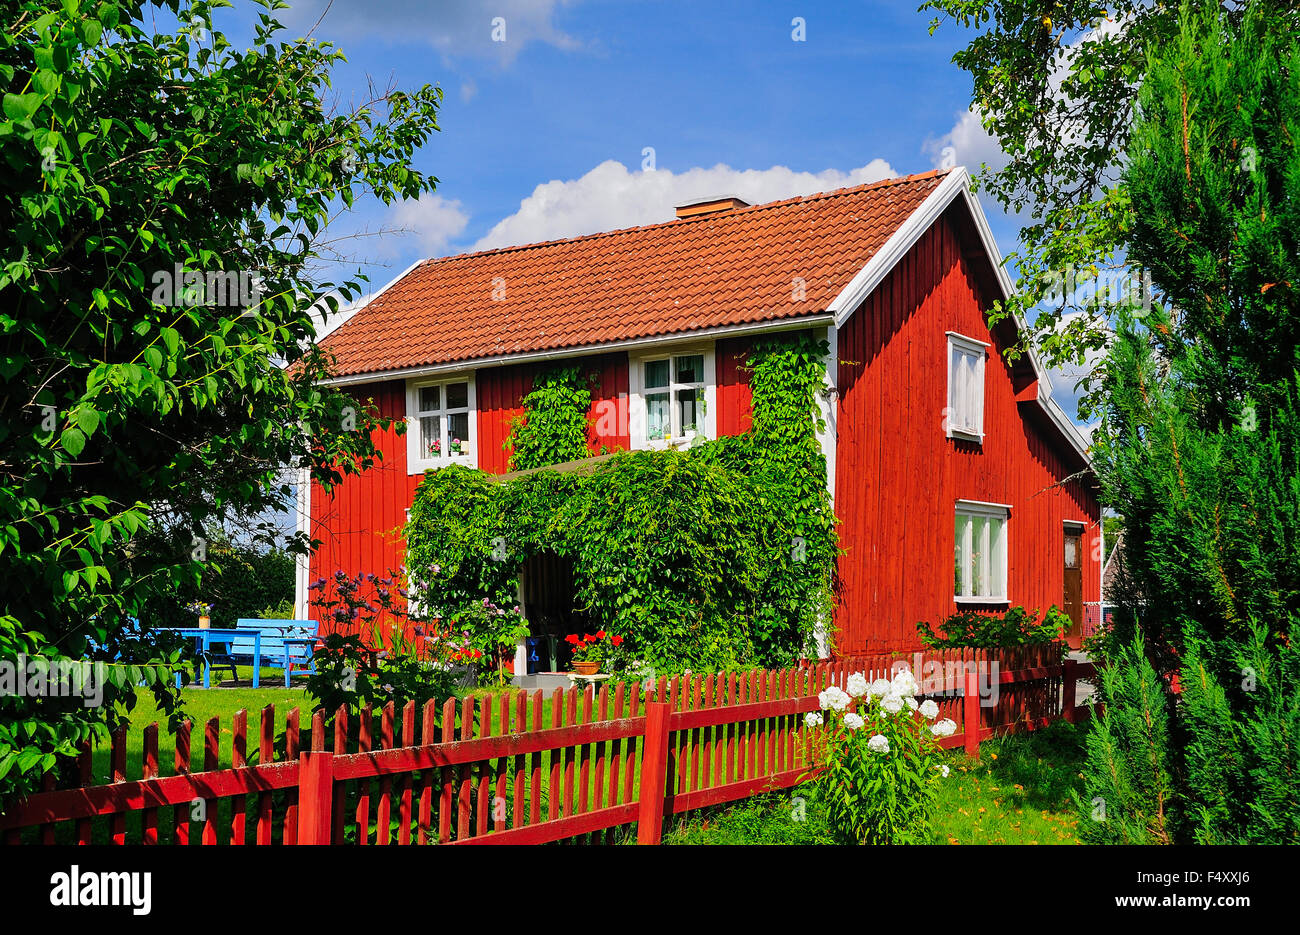 Location del film di Astrid Lindgren film, sei Bullerby bambini, cortile nord, Sevedstorp, Vimmerby, Kalmar County Foto Stock